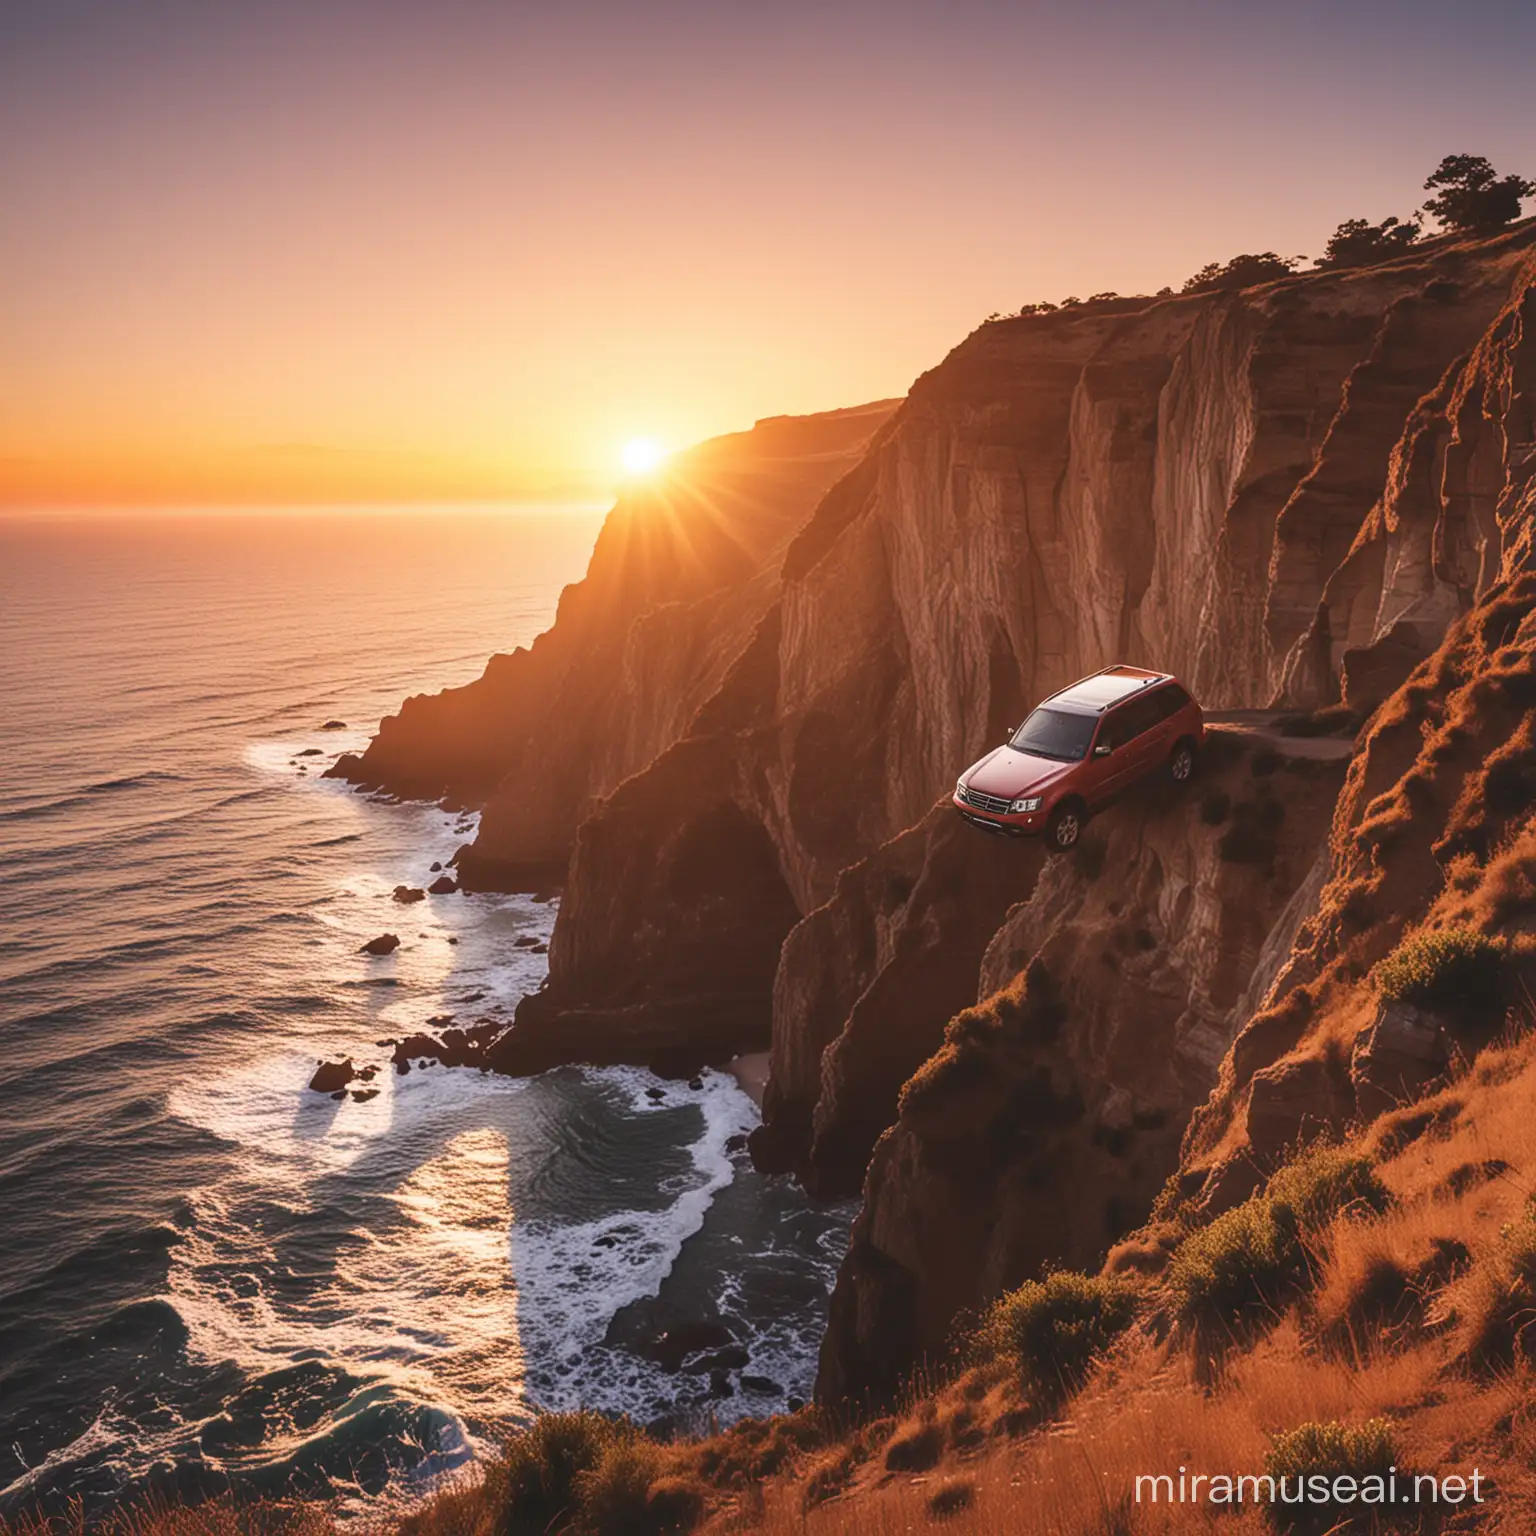 Dramatic Sunset Scene Car Plunging Off Cliff